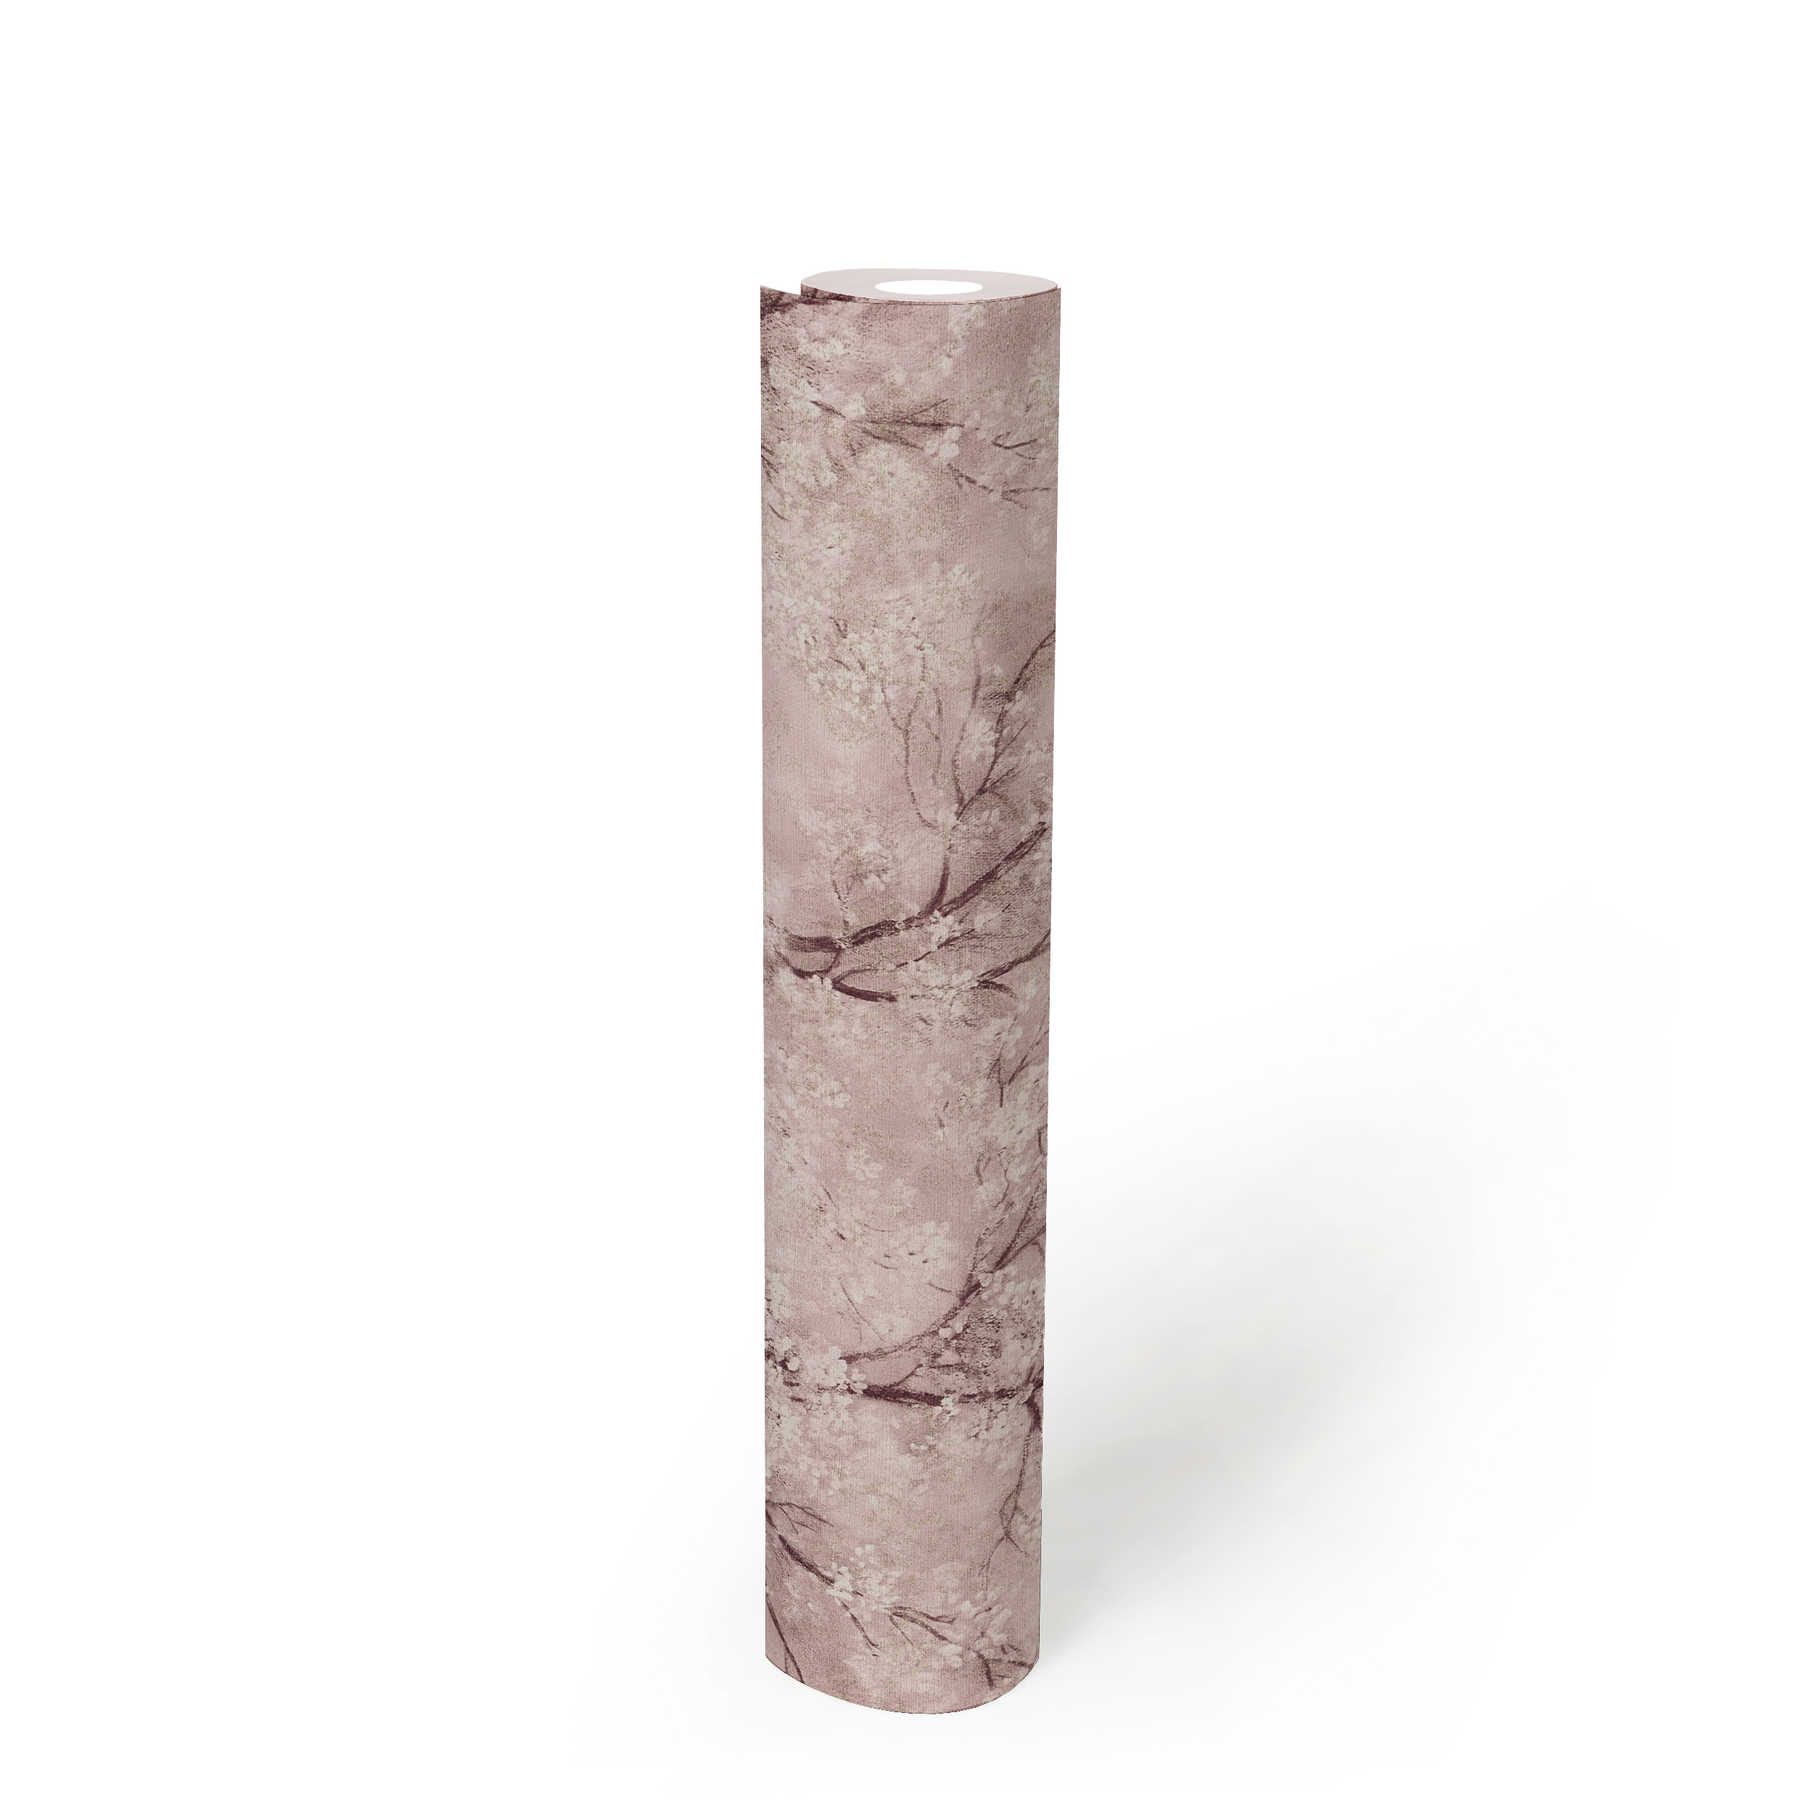             papel pintado efecto flor de cerezo - rosa, marrón, blanco
        